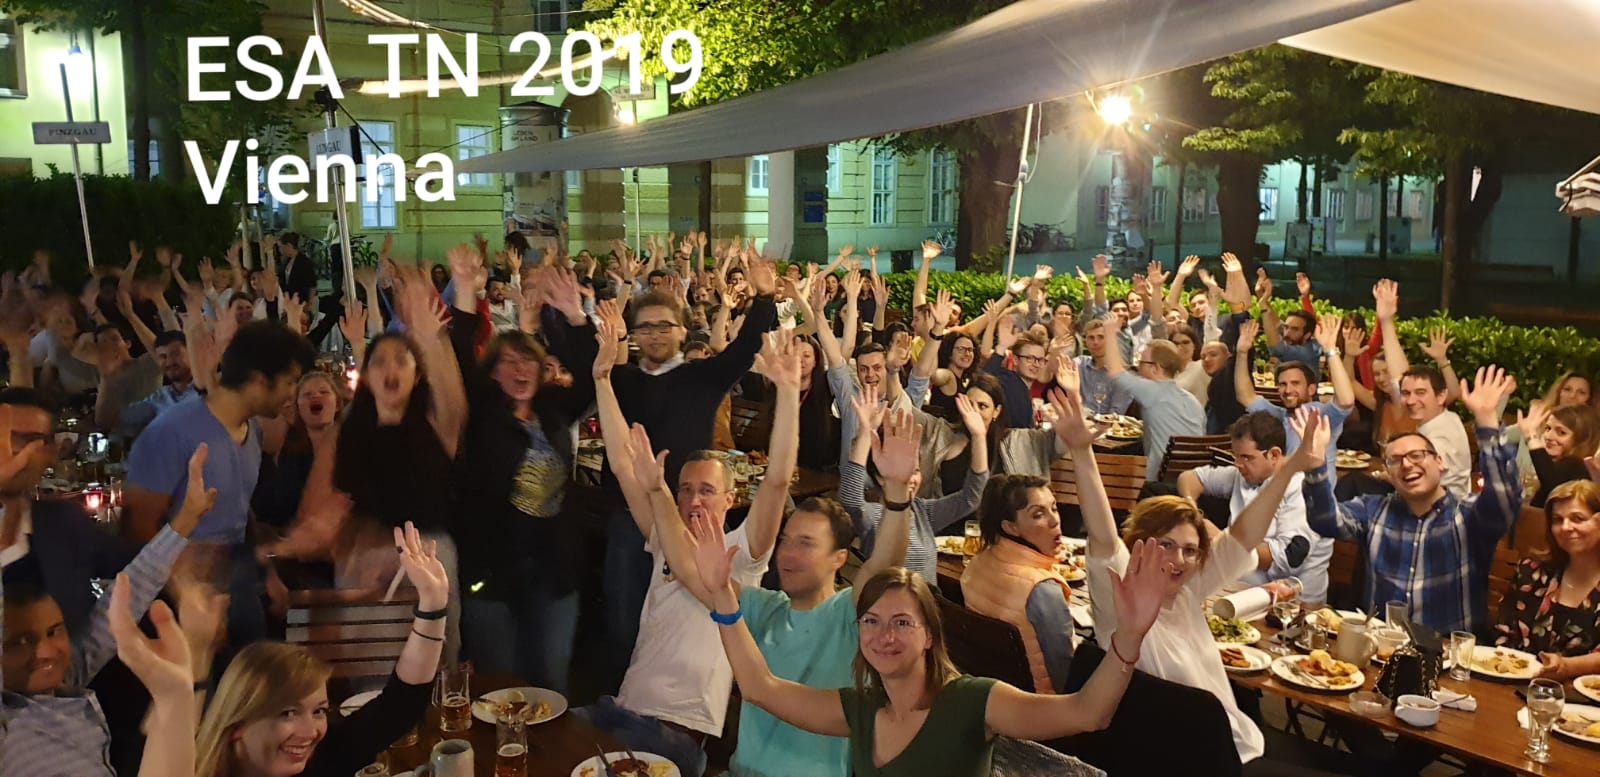 Euroanaesthesia 2019 - ESA Trainee Network dinner